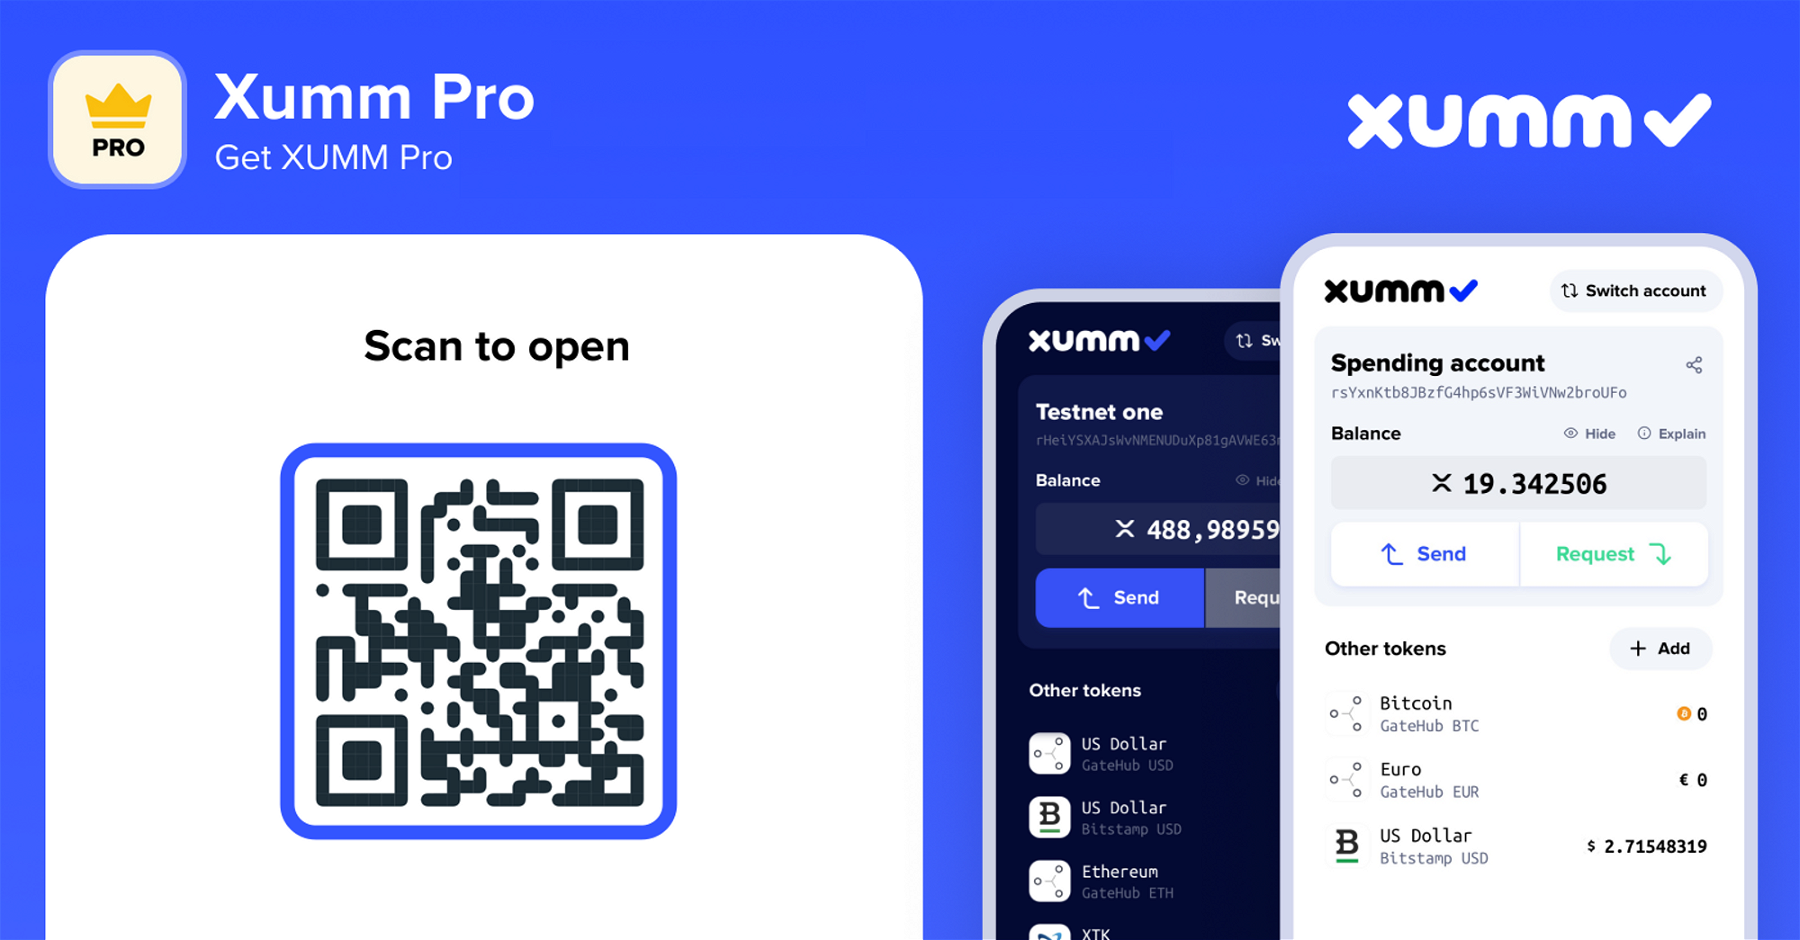 Get Xumm Pro